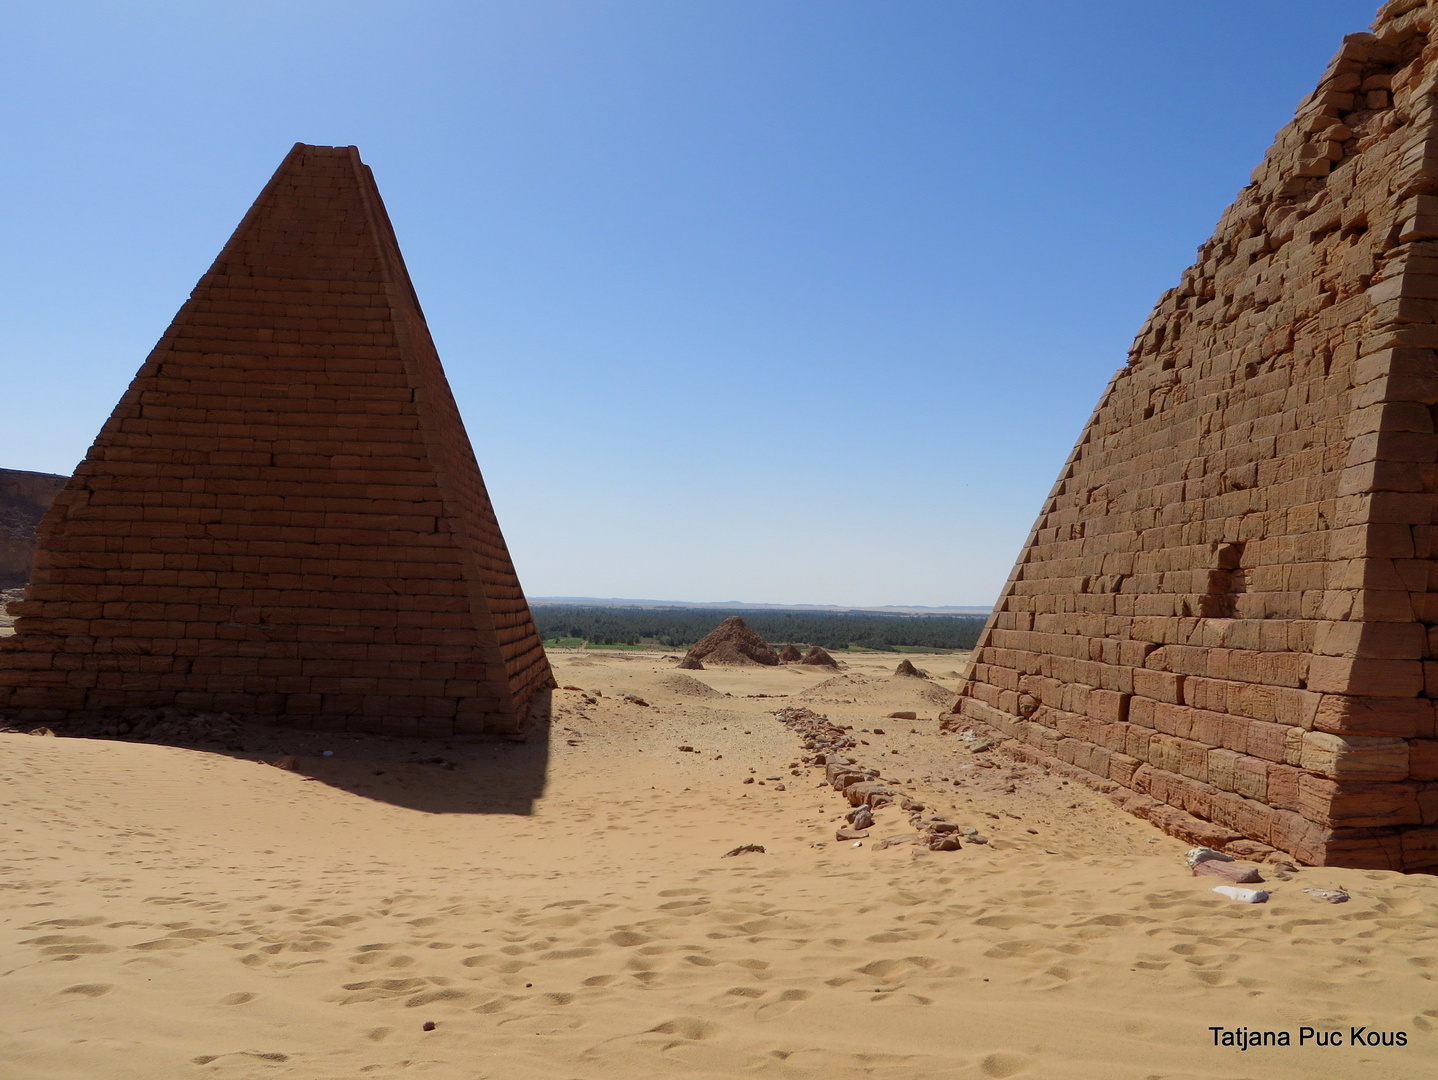 Nile and pyramids of black faraons